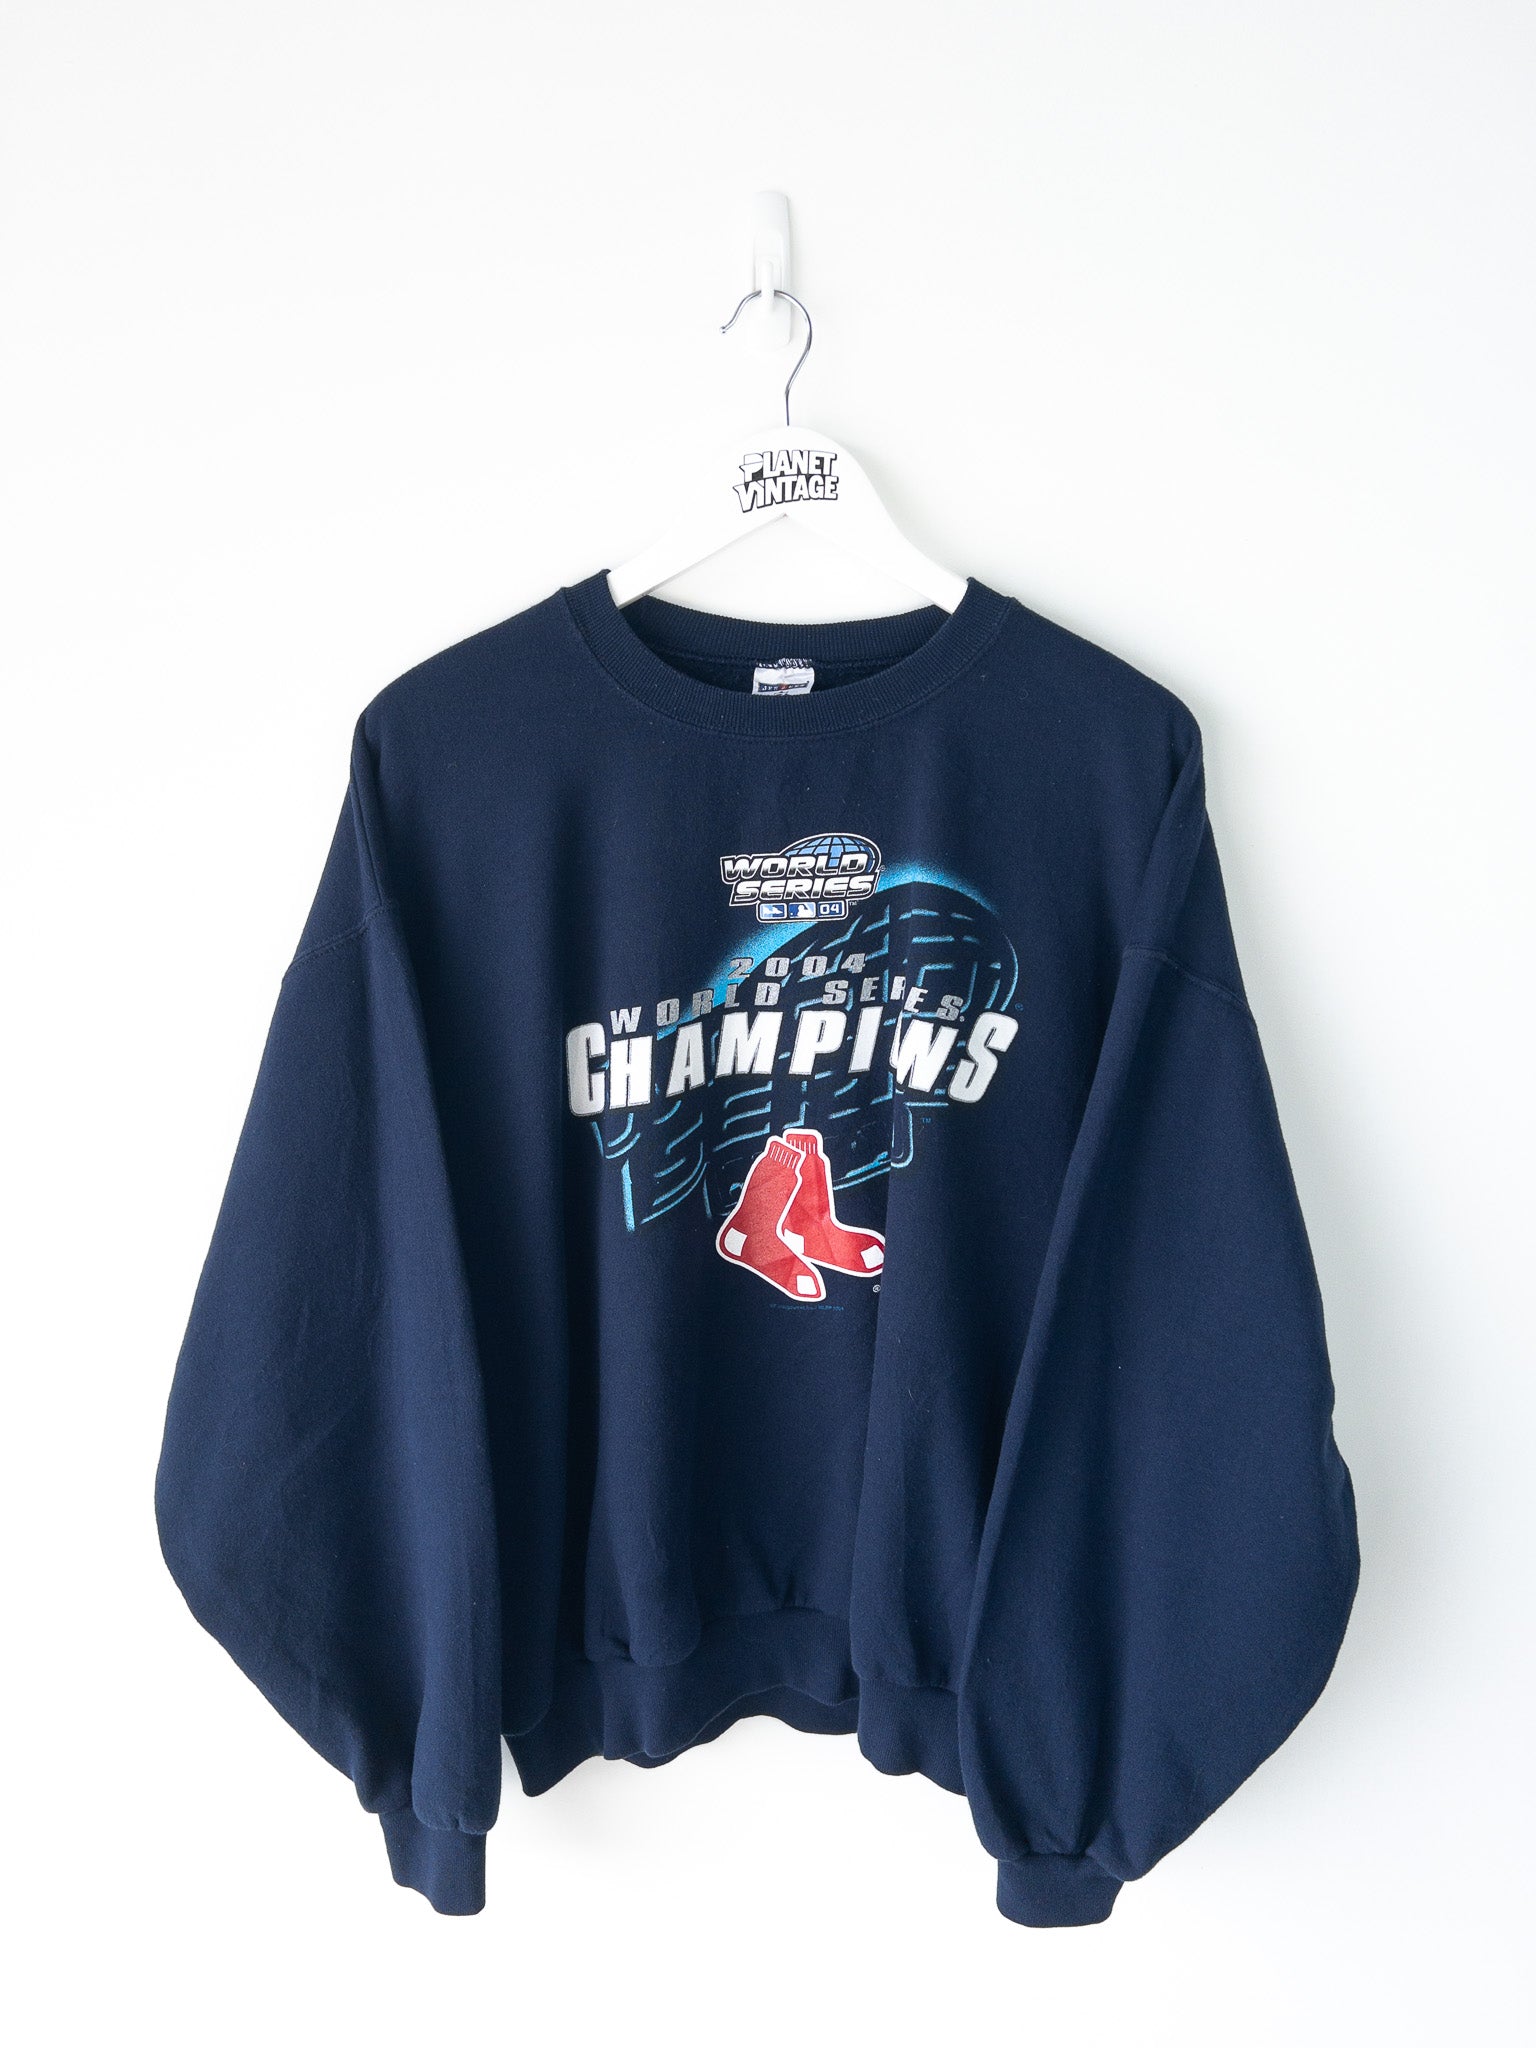 Vintage Red Sox Champions 2004 Sweatshirt (L)